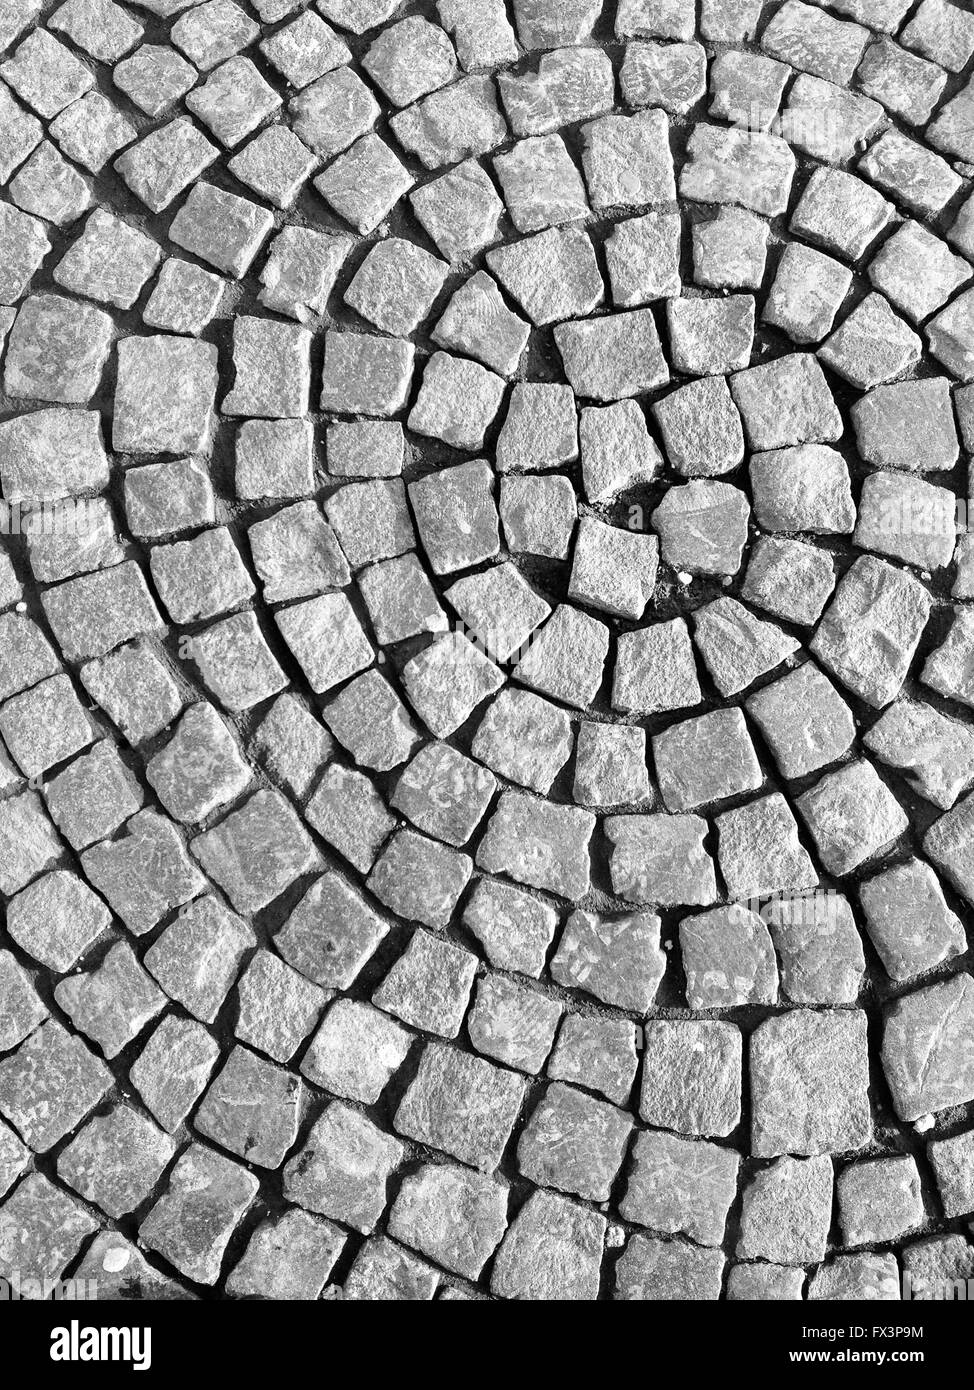 Gehweg Steinplatten gelegt in kreisförmigen Muster. Stockfoto